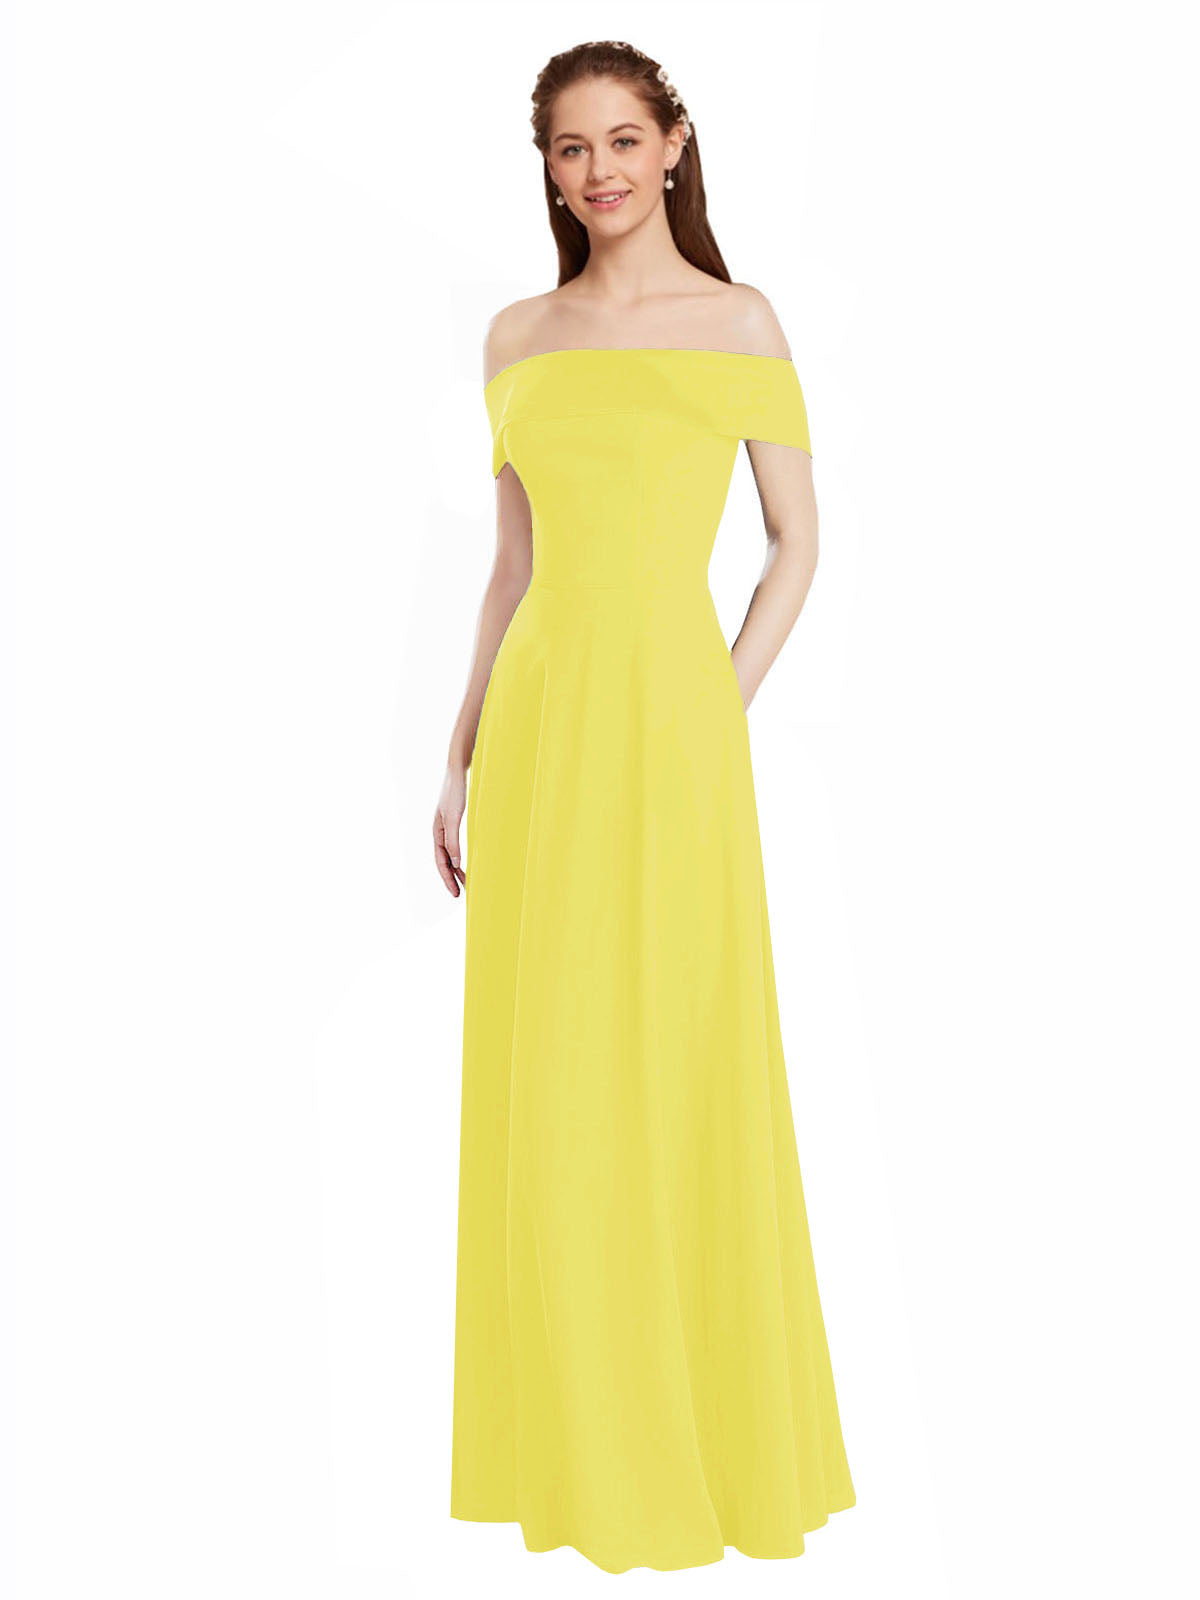 Yellow A-Line Off the Shoulder Cap Sleeves Long Bridesmaid Dress Lina